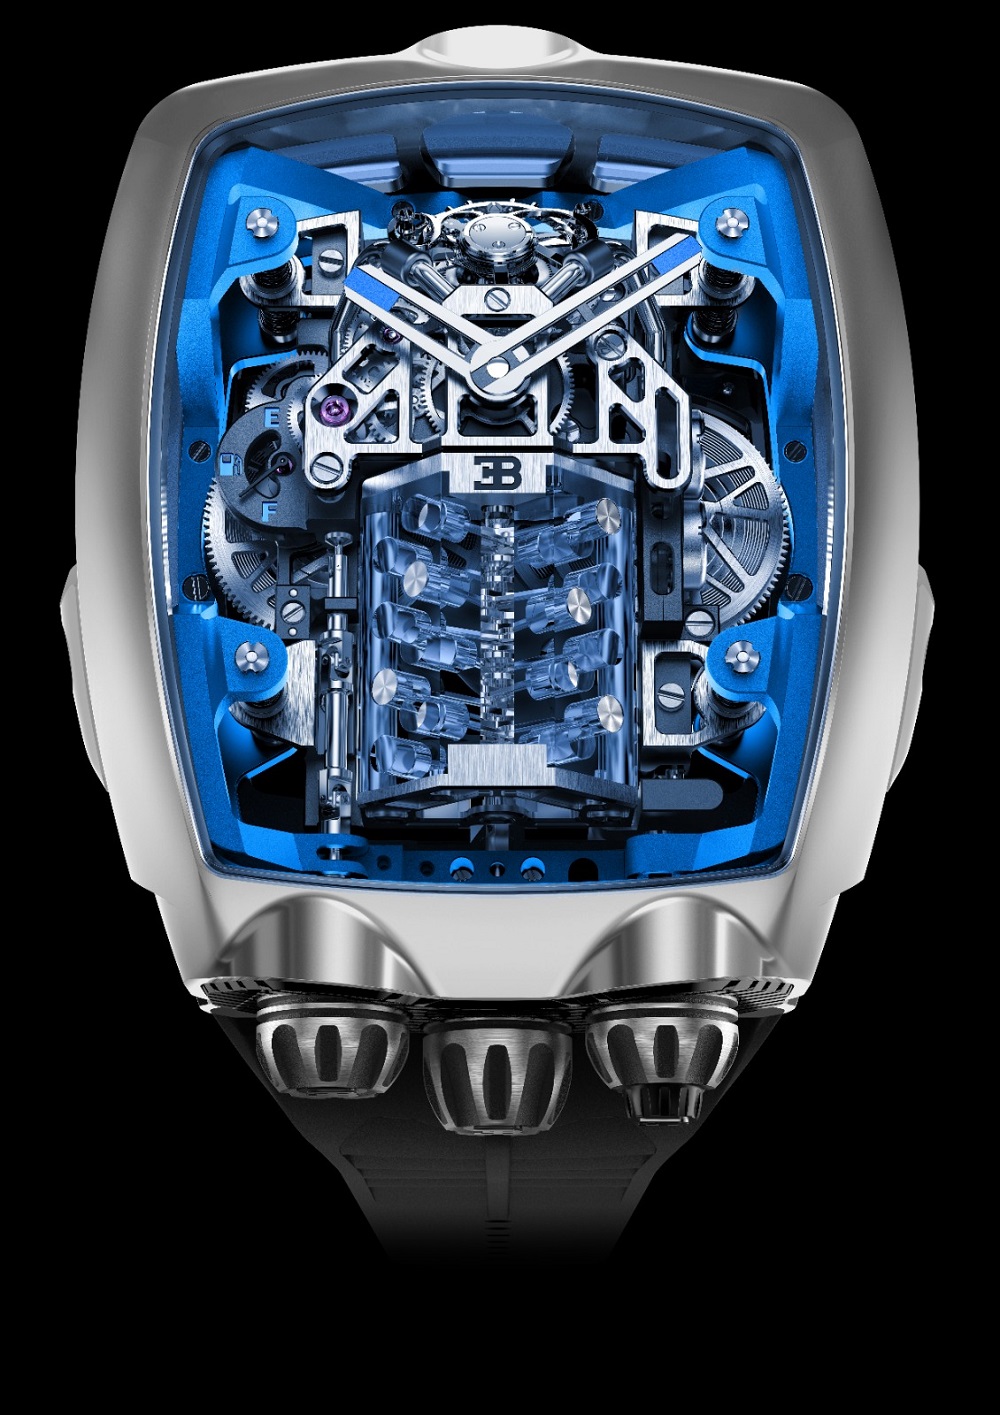 Bugatti Chiron Watch Has its Own Tiny W16 Engine TeamSpeed